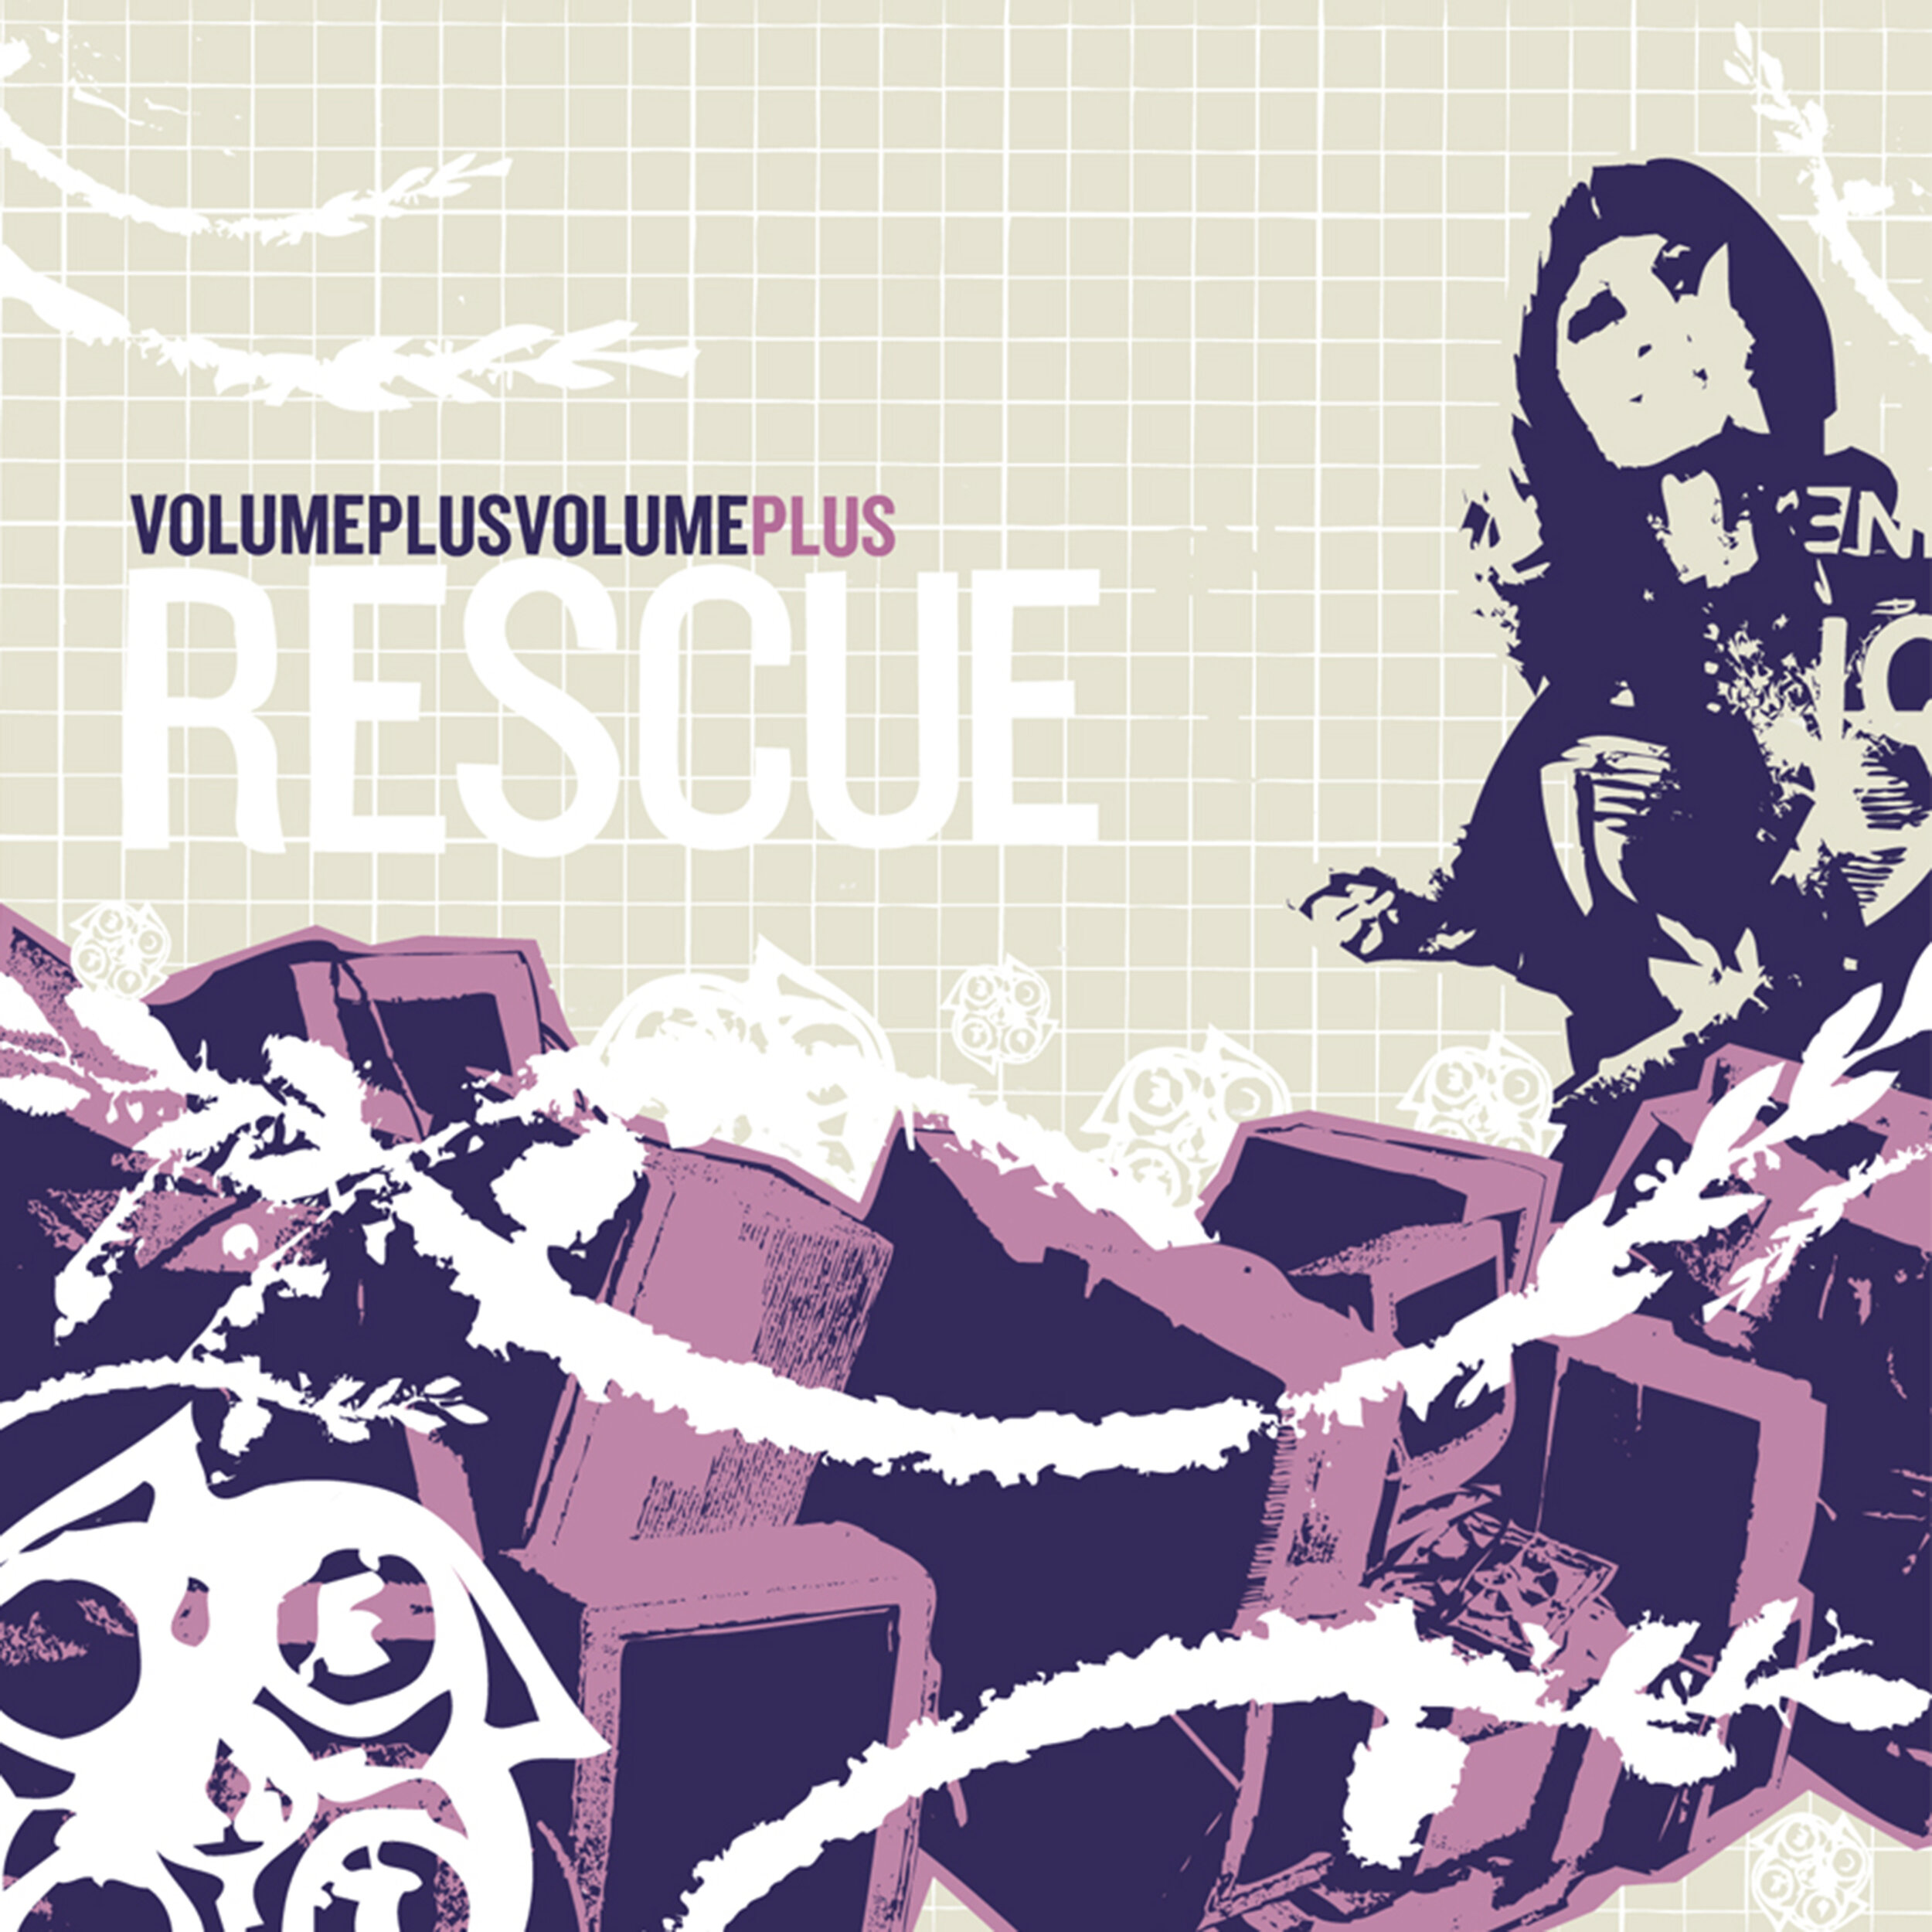 FAR-012 Rescue - VOLUME PLUS VOLUME PLUS 2xCD